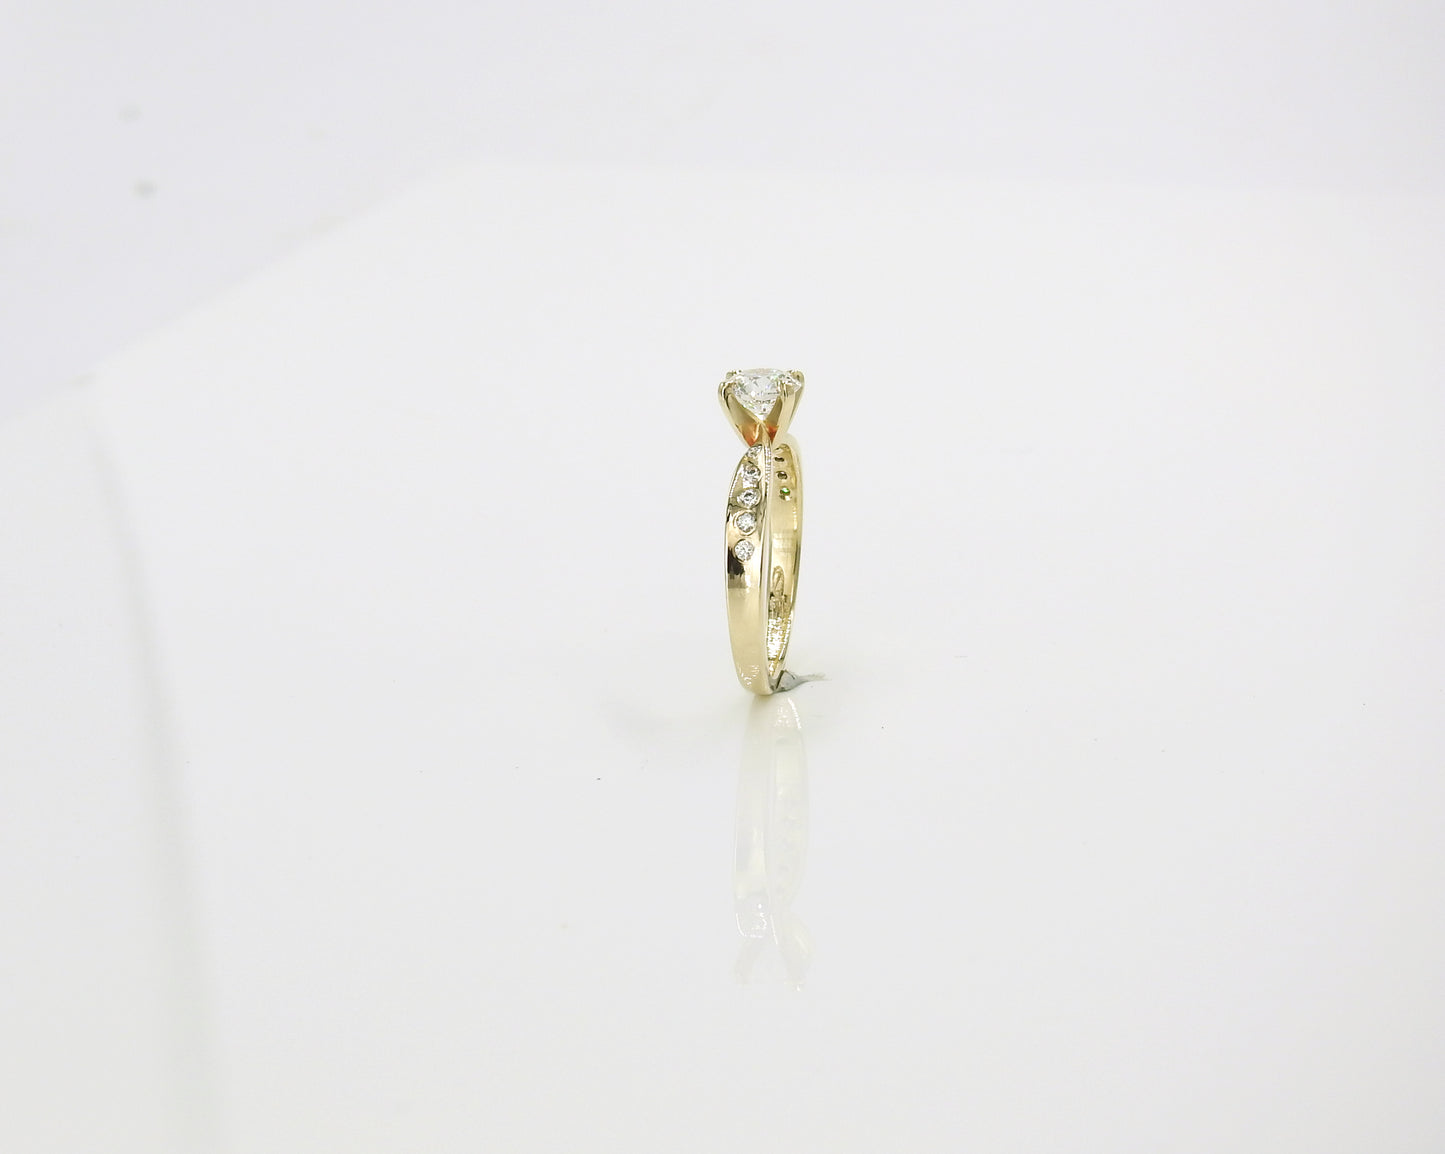 Canadian Diamond engagement ring